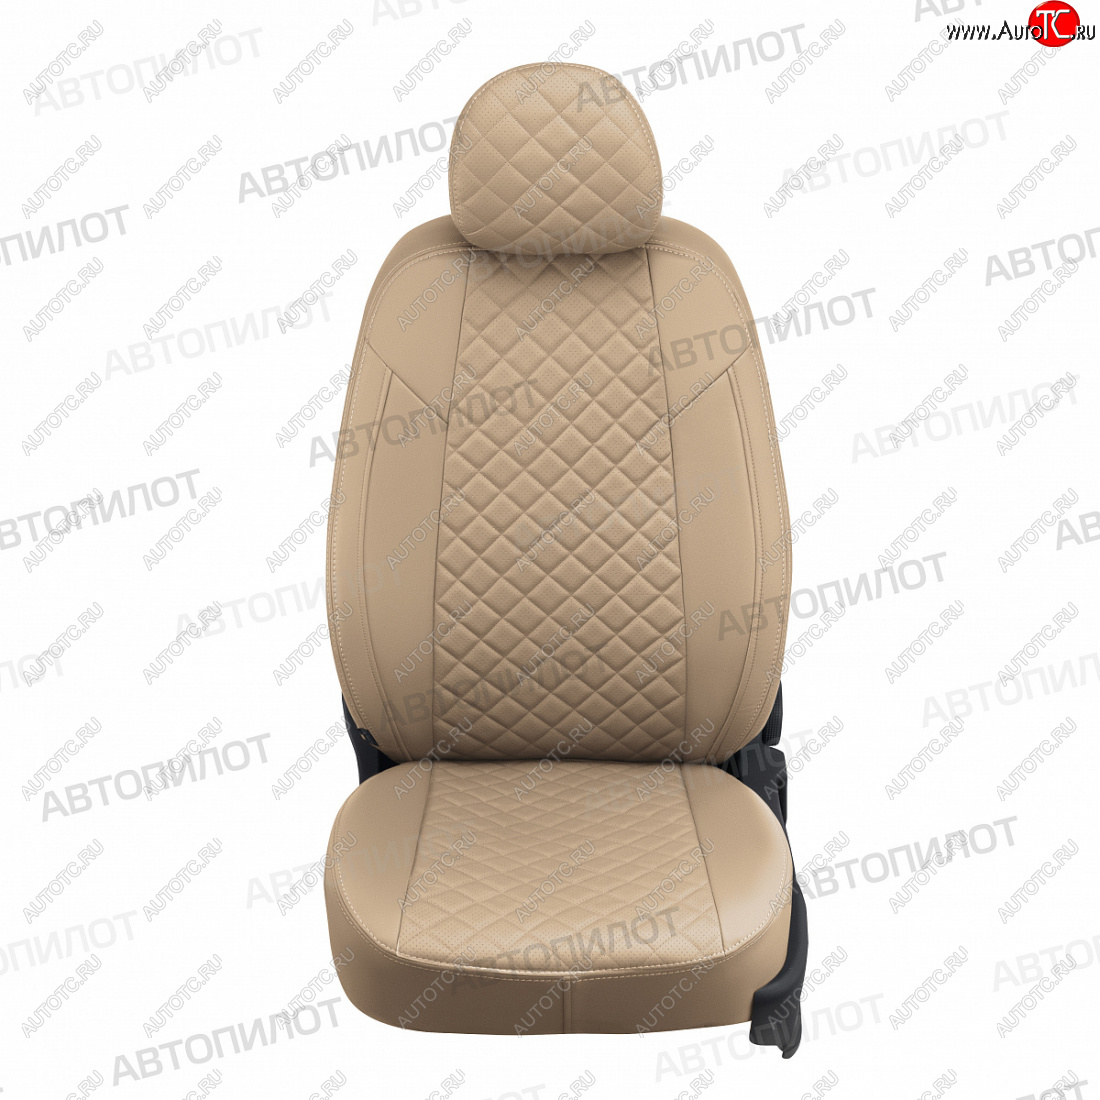 13 999 р. Чехлы сидений (экокожа) Автопилот Ромб  Hyundai Terracan  1 HP (2001-2007) (темно-бежевый)